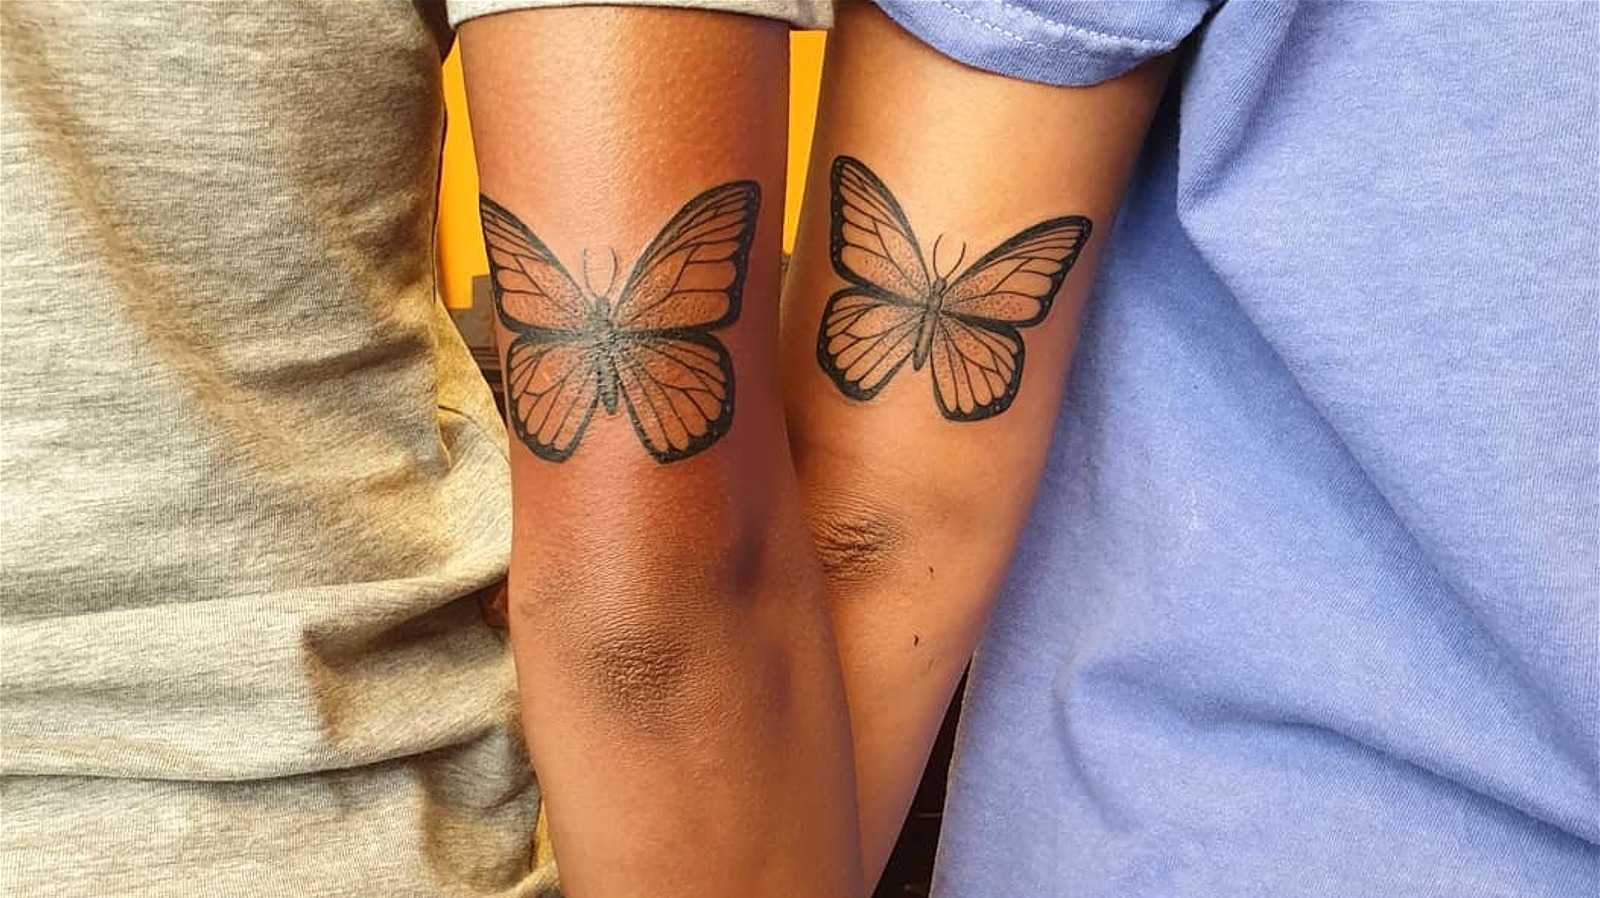 Matching butterfly tattoo for best friends